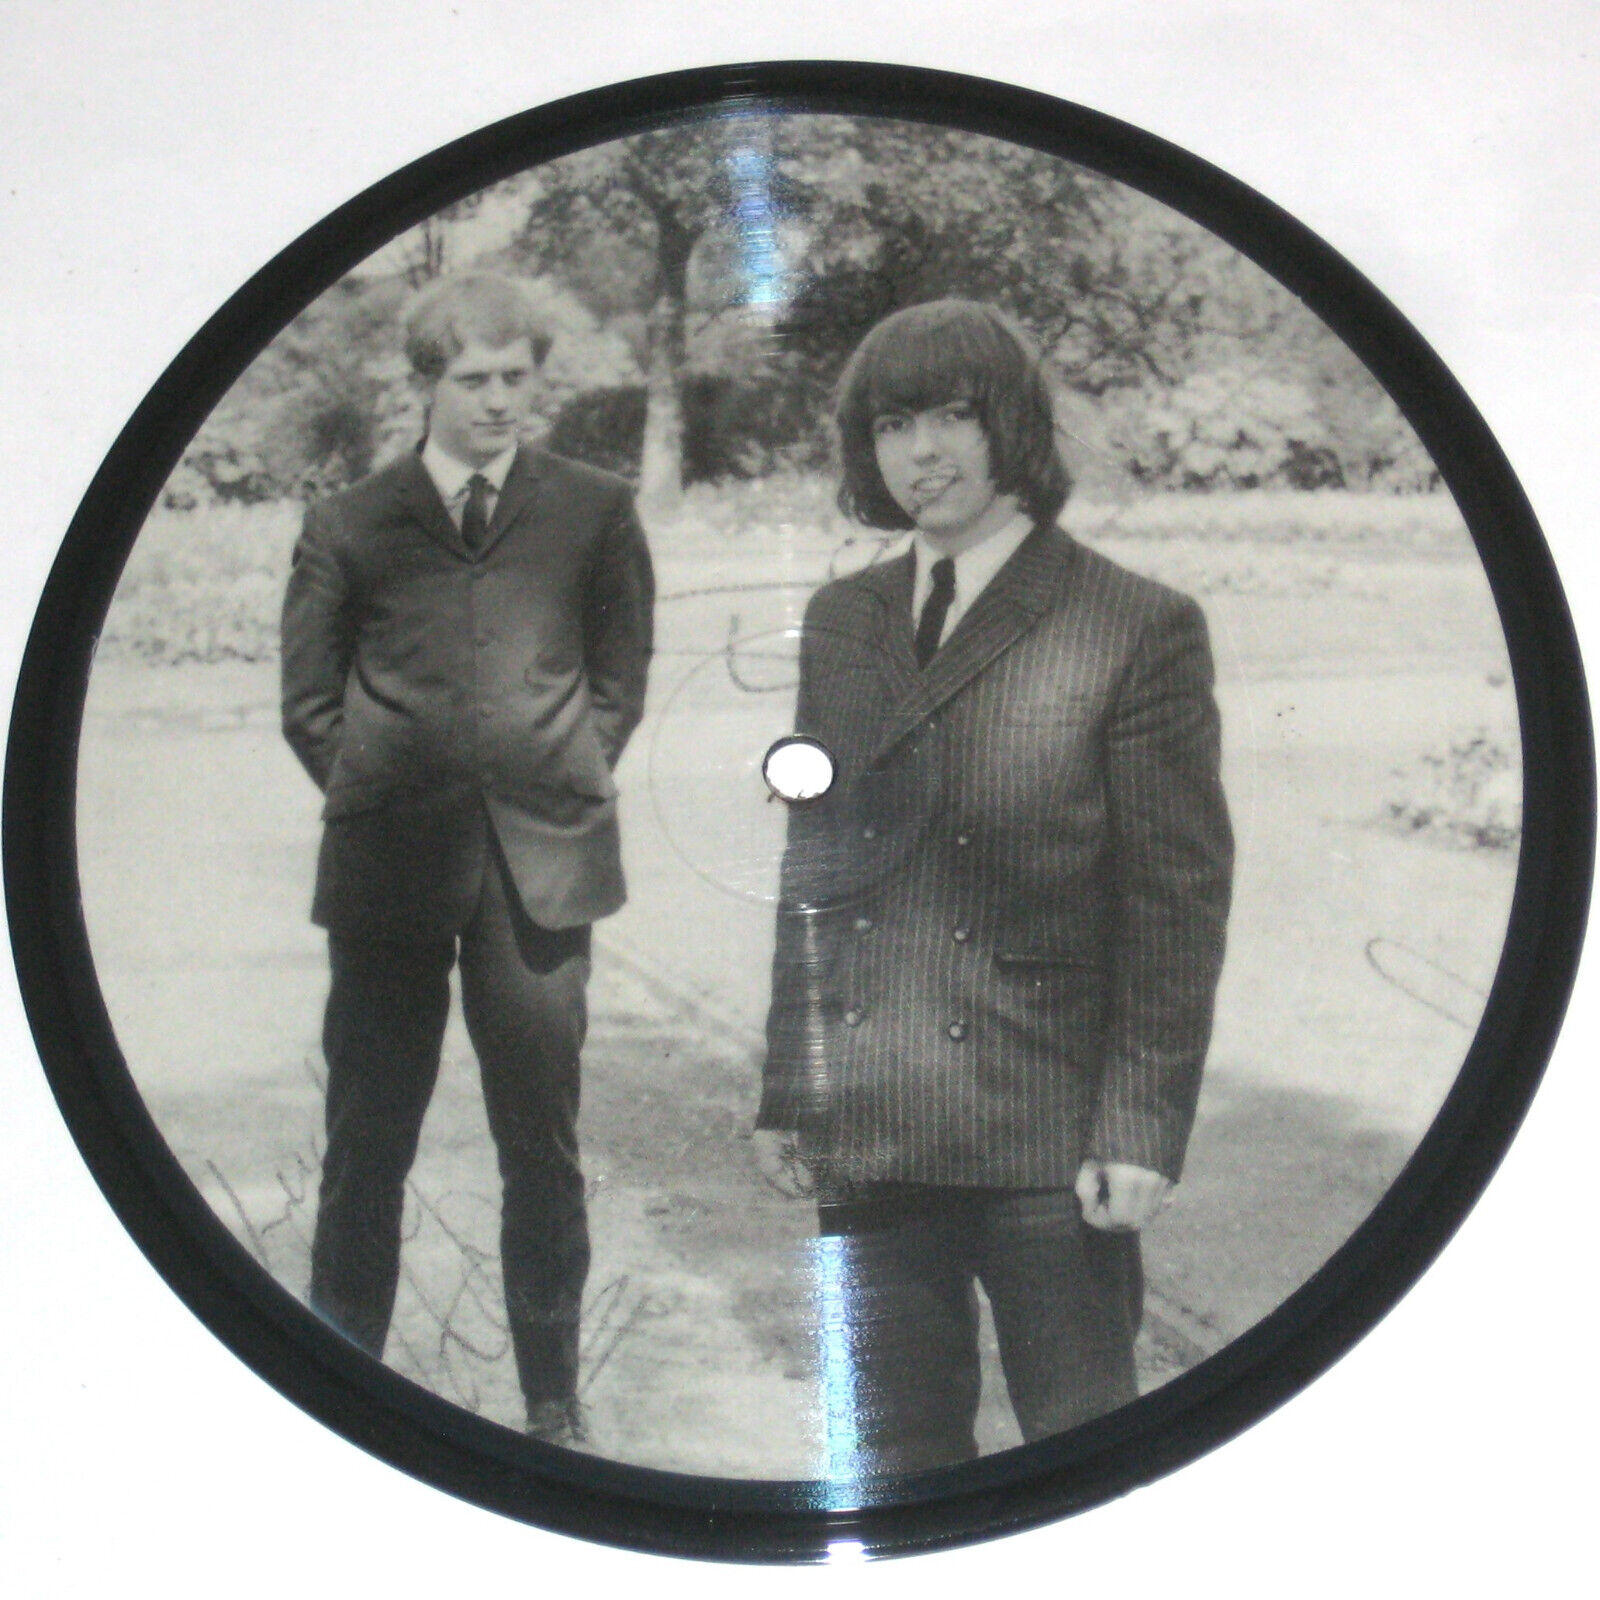 slade-noddy-holder-7-picture-disc-rare-uk-vinyl-45-pic-disk-test-pressing-hill